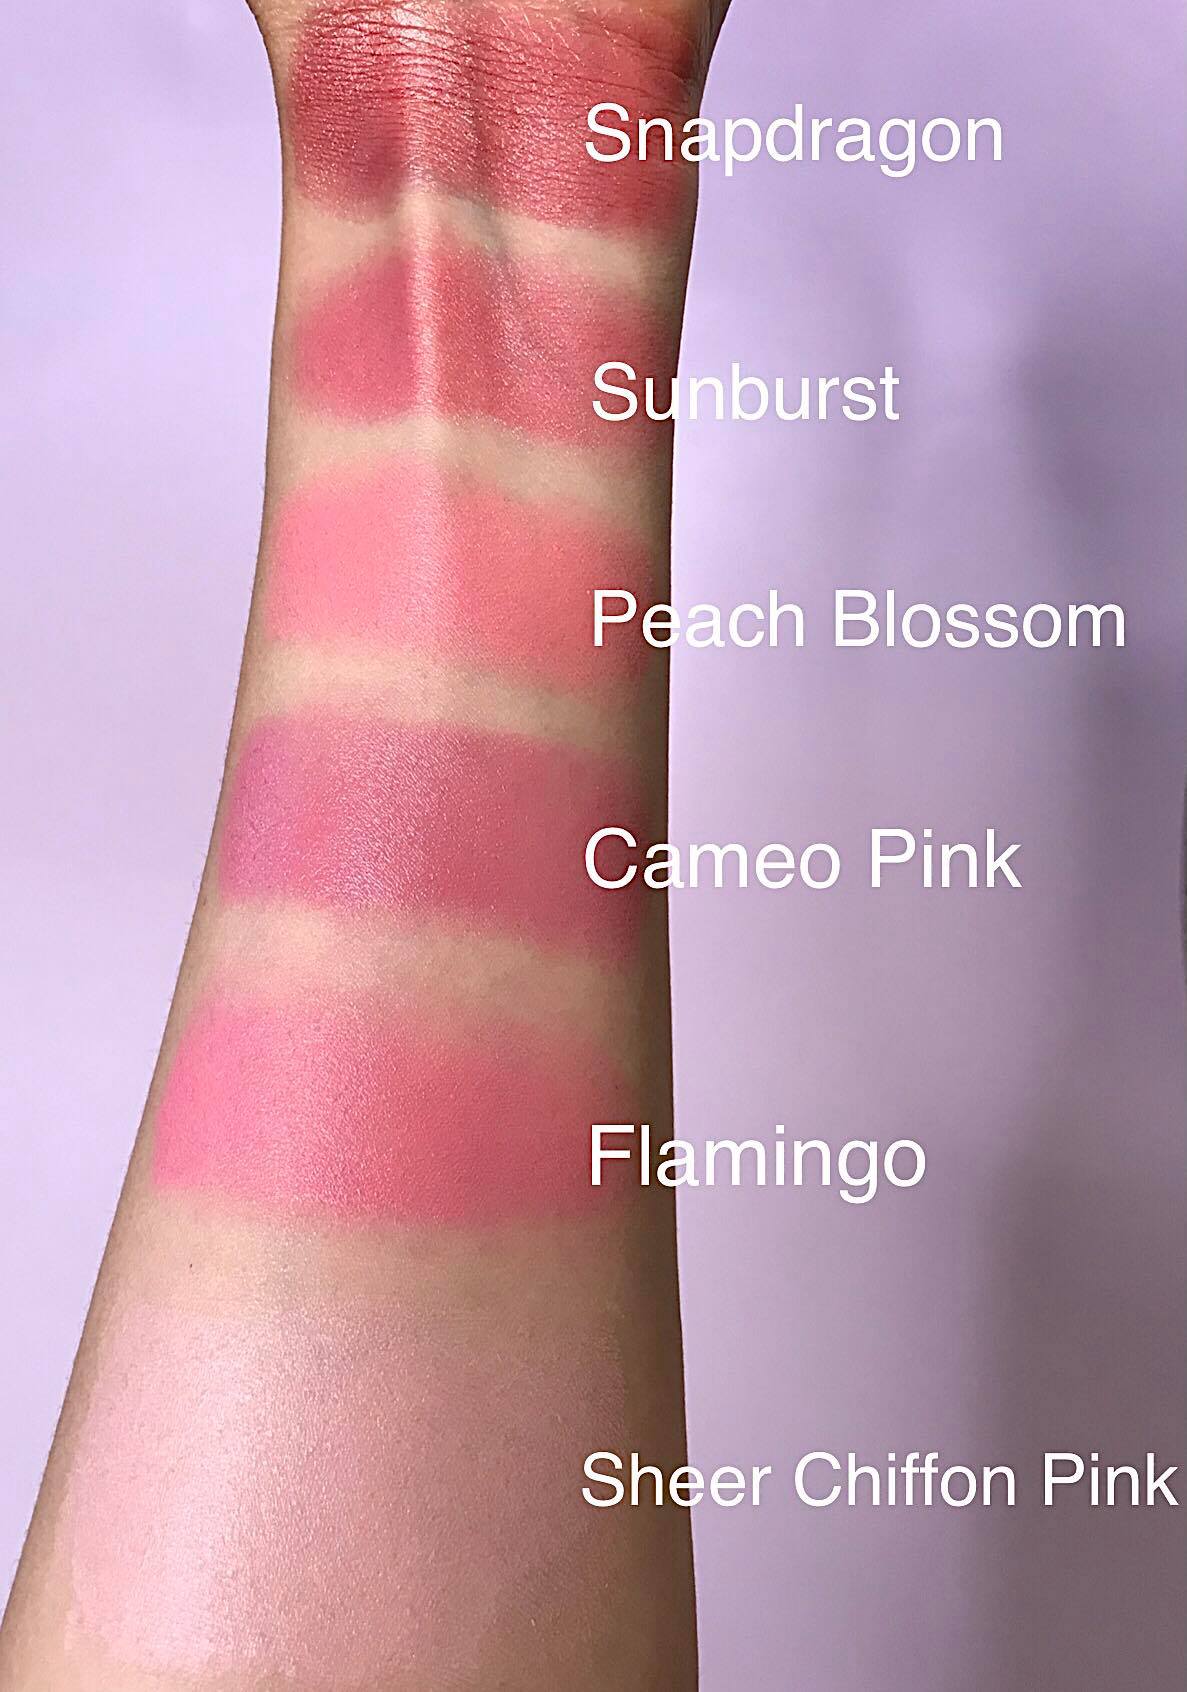 Cream Blush (Cameo Pink) - Très Glow beauty